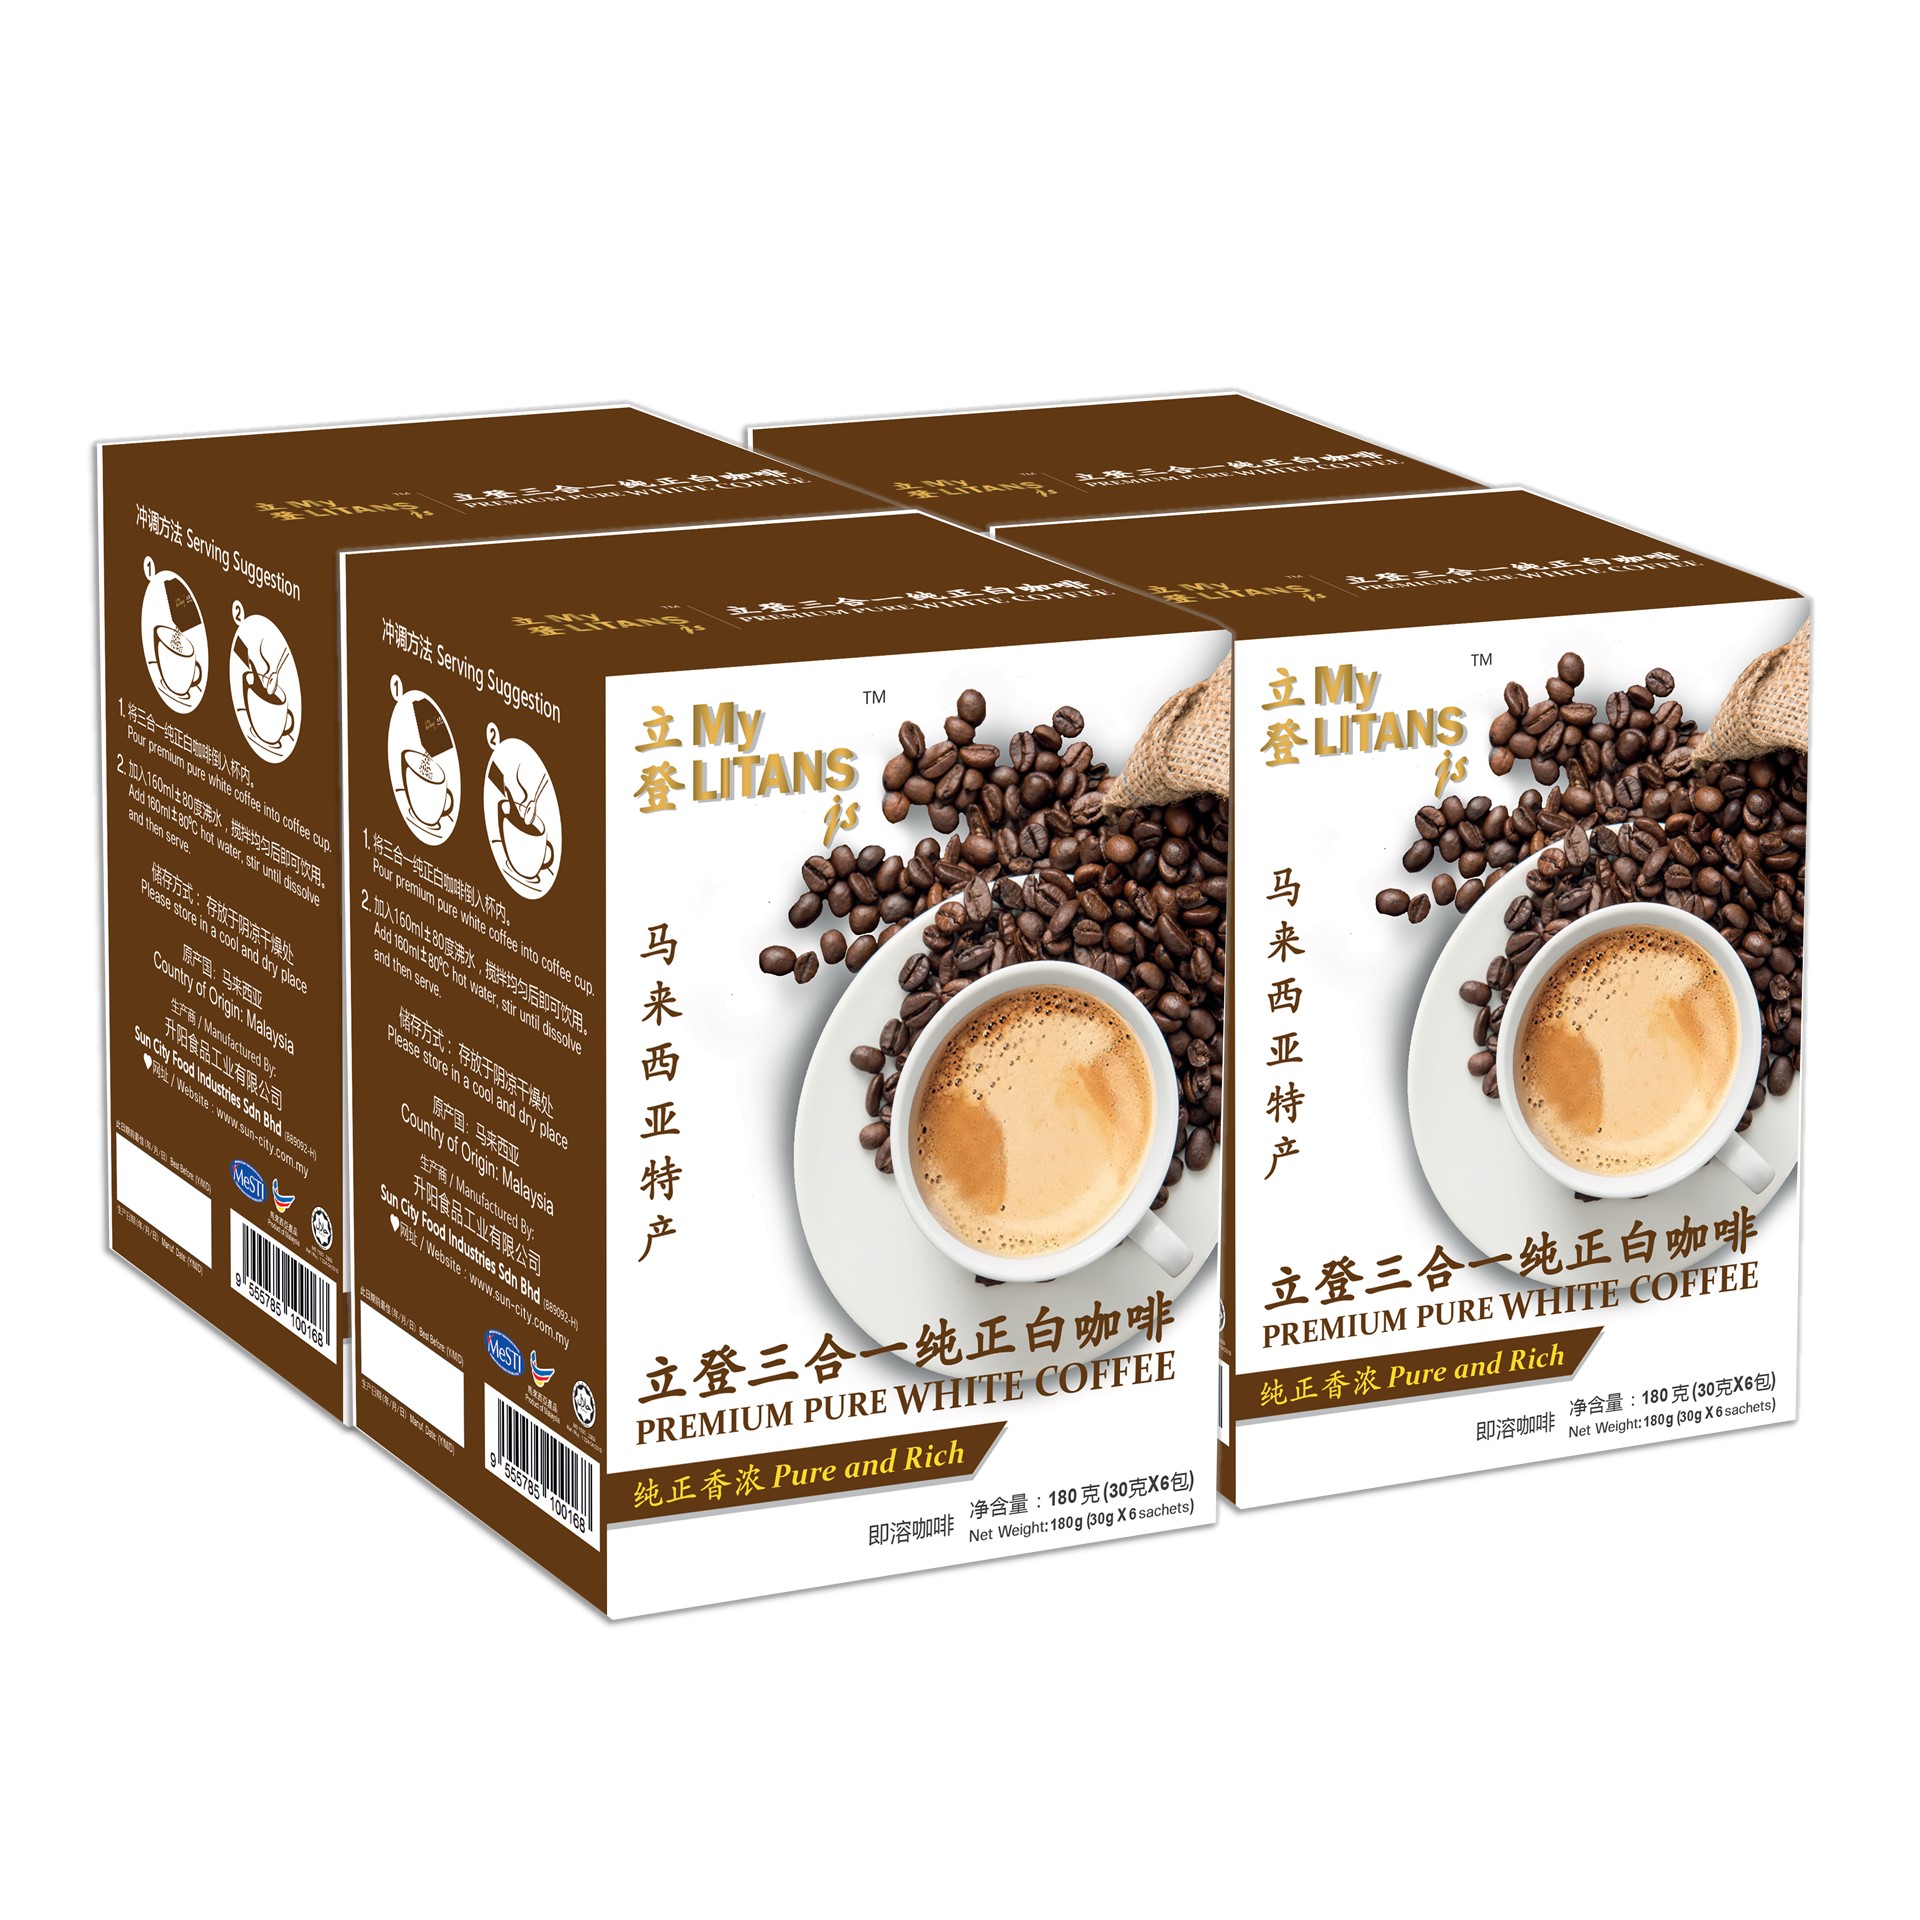 MyLITANSjs 3 in 1 Premium Pure White Coffee [4 Boxes] (30g x 6 sachets)